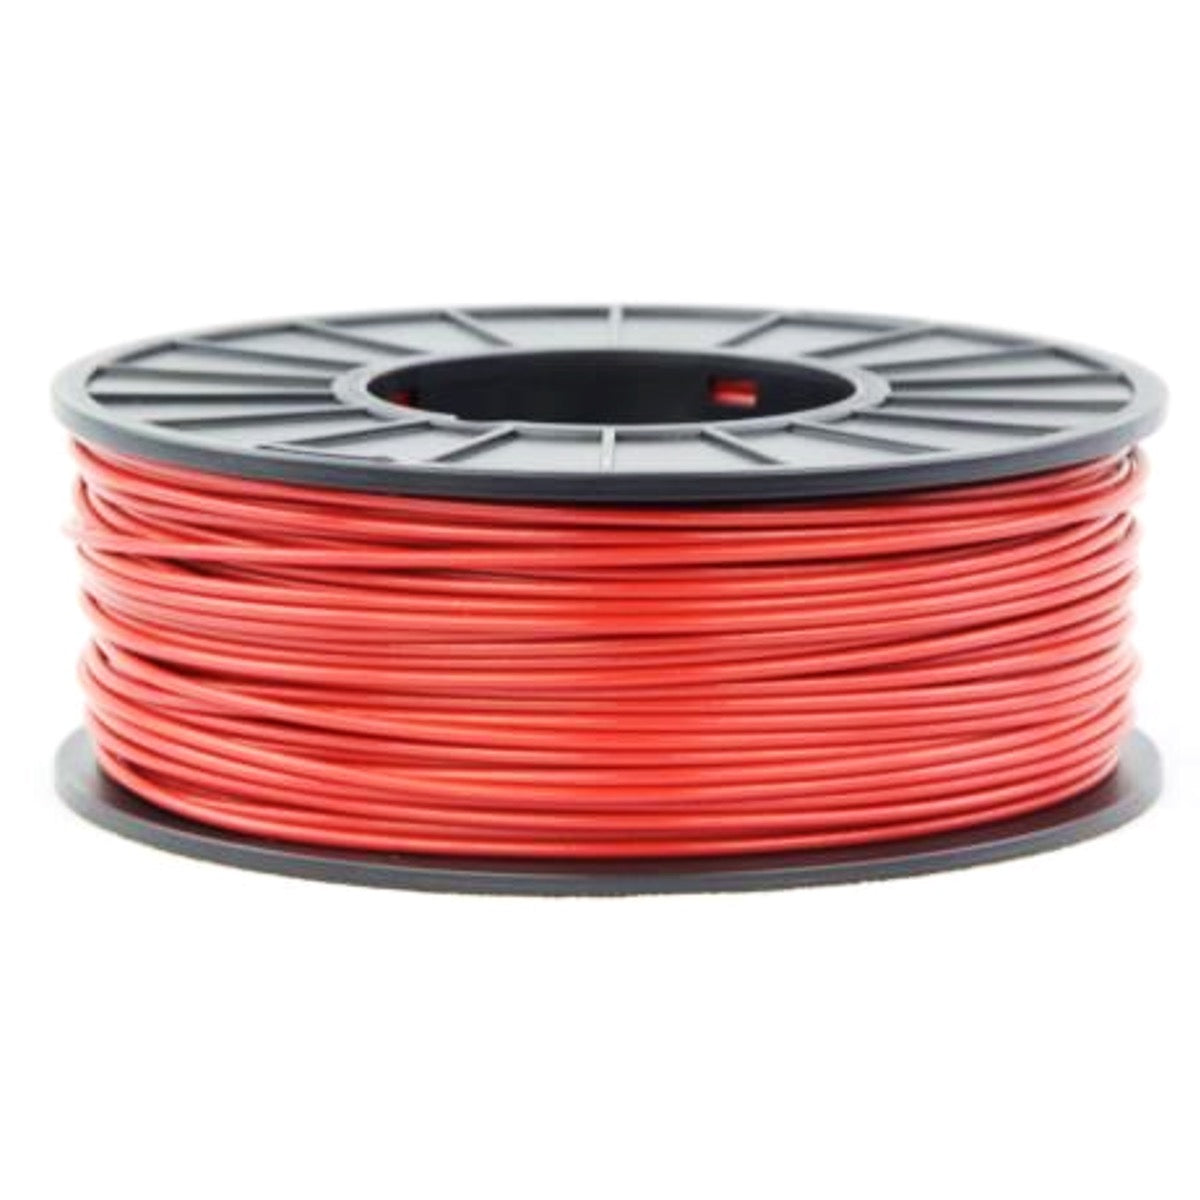 3DMakerWorld Premium PLA Filament - 2.85mm, 1kg,  Red